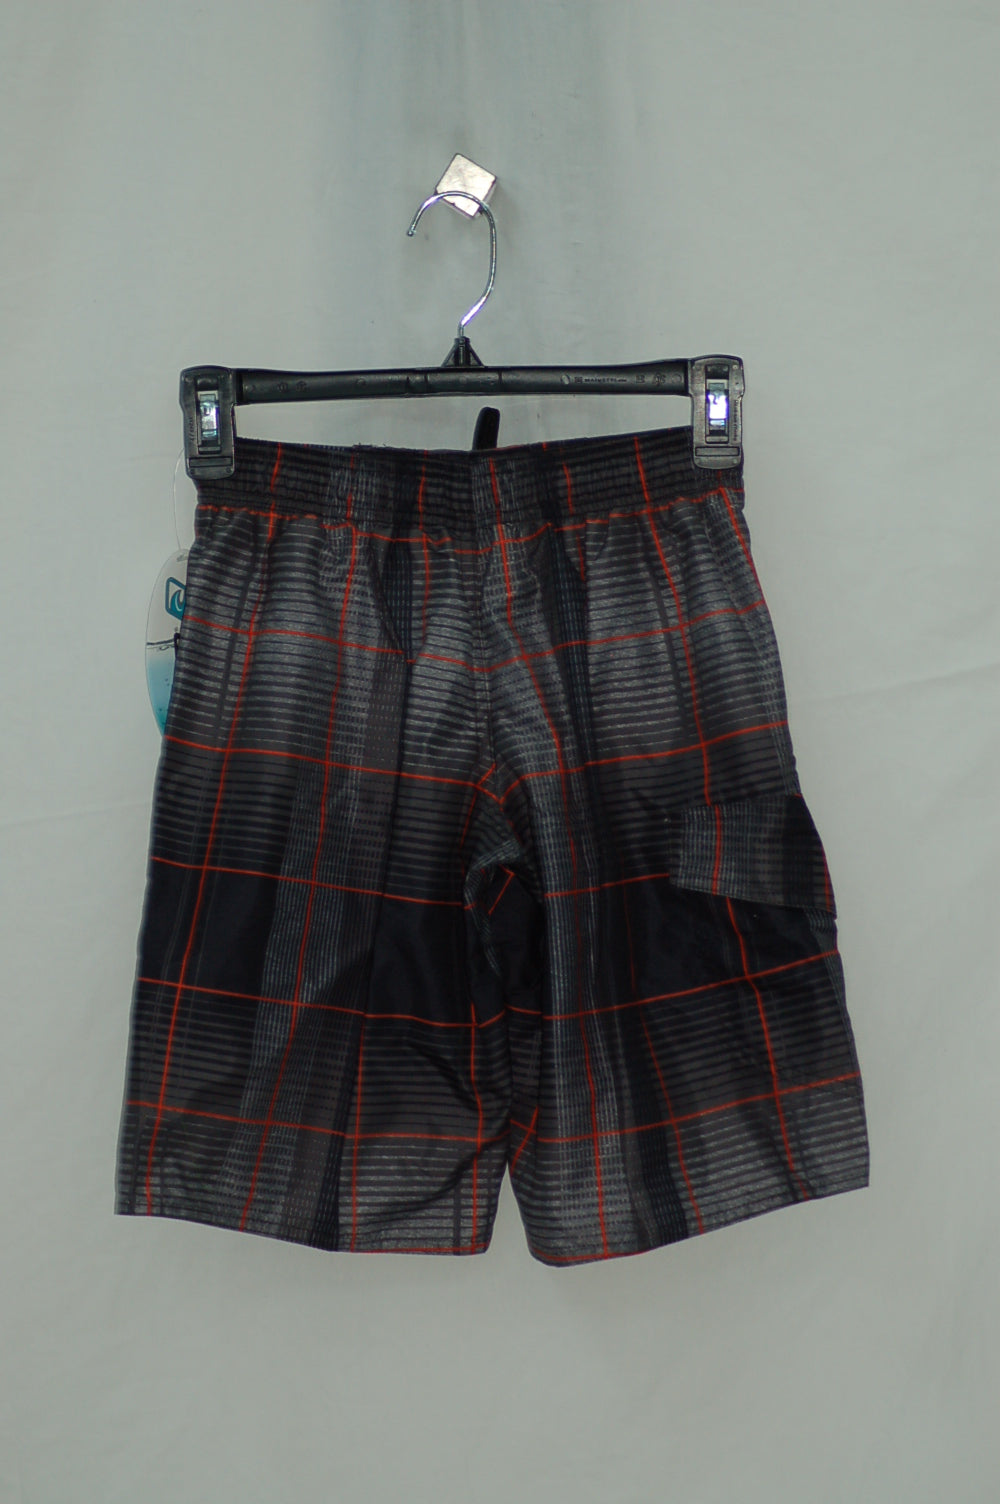 Laguna Boy's Plaid Shorts, Black, Size Small (8)